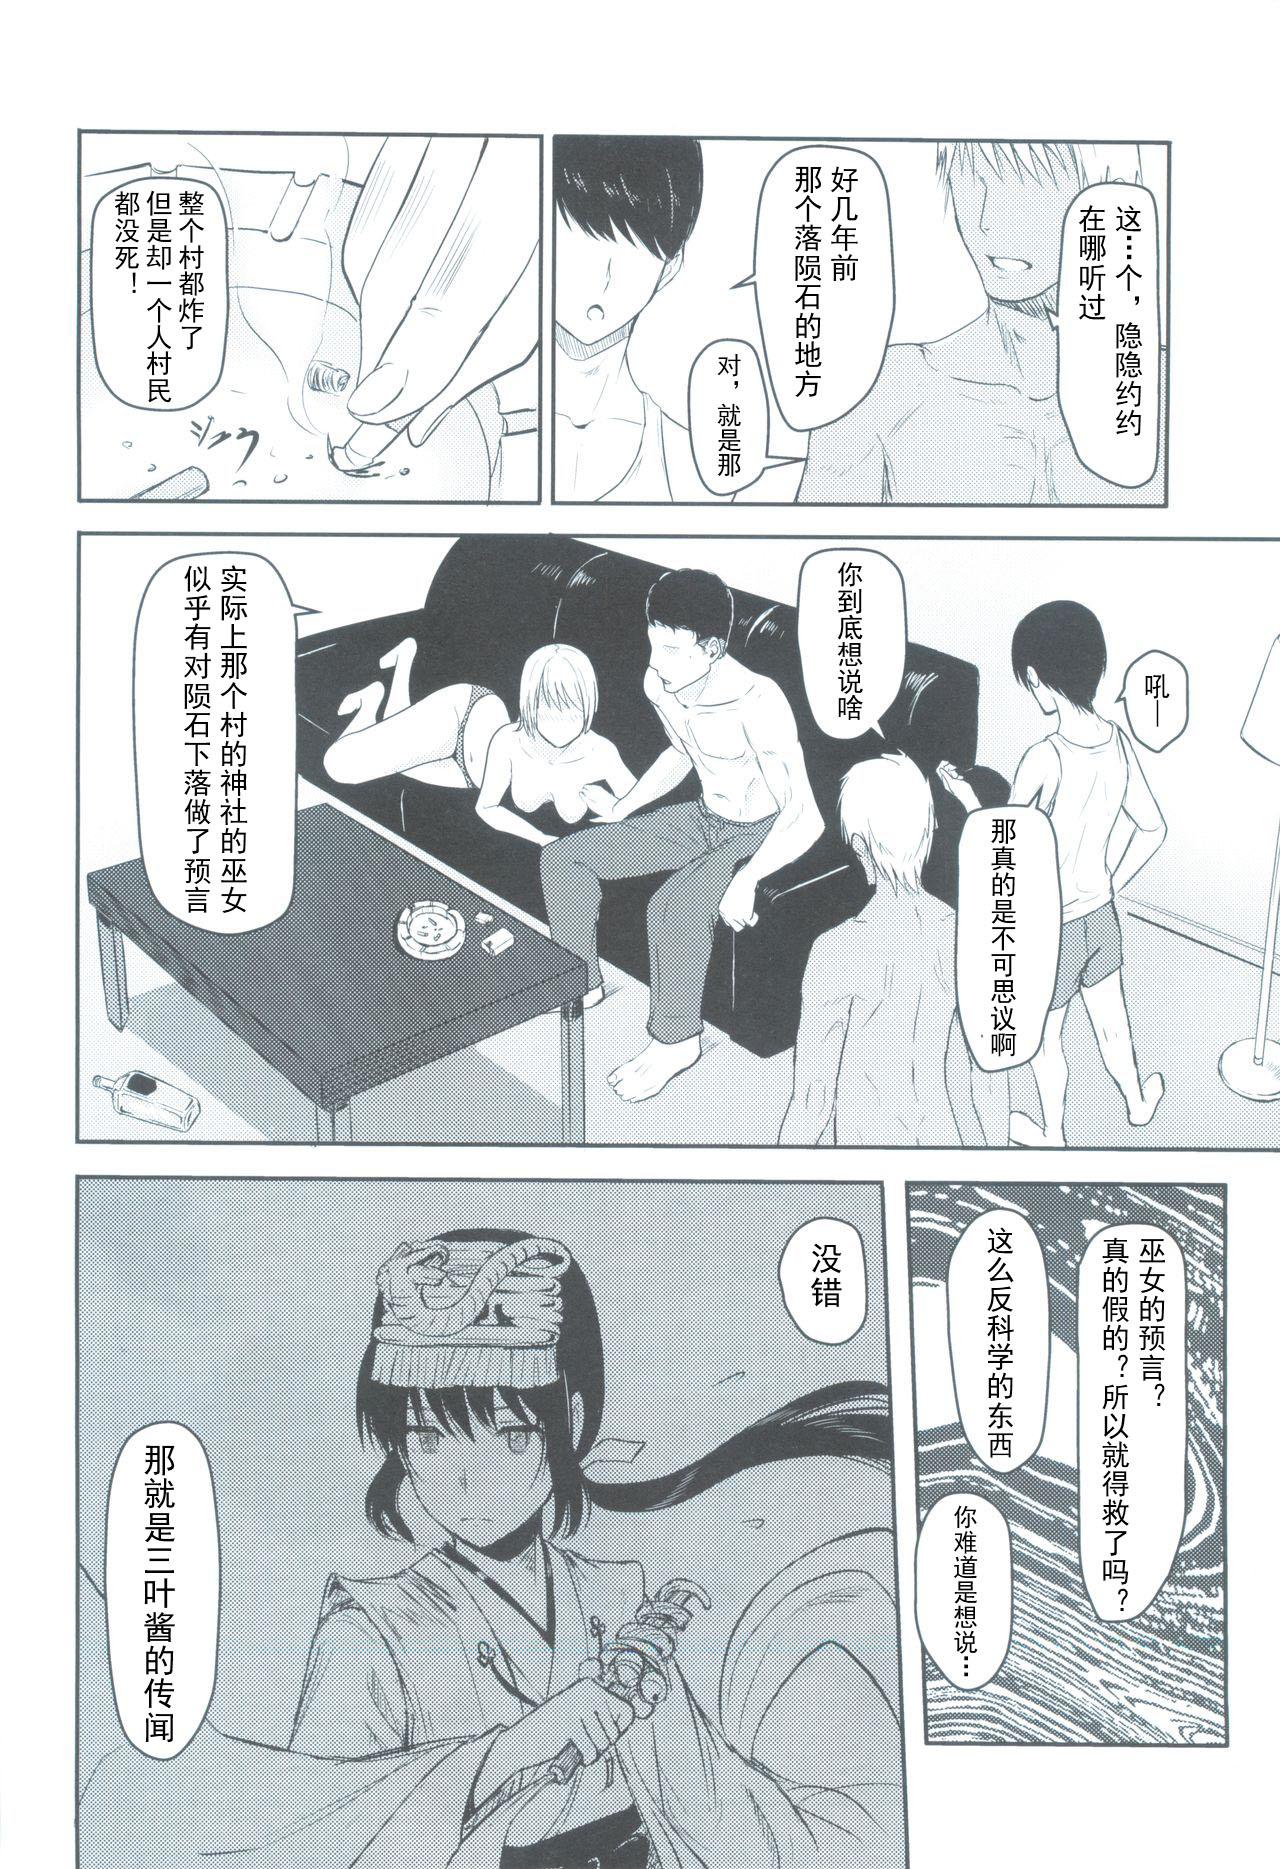 Big Ass Mitsuha - Kimi no na wa. Verification - Page 5